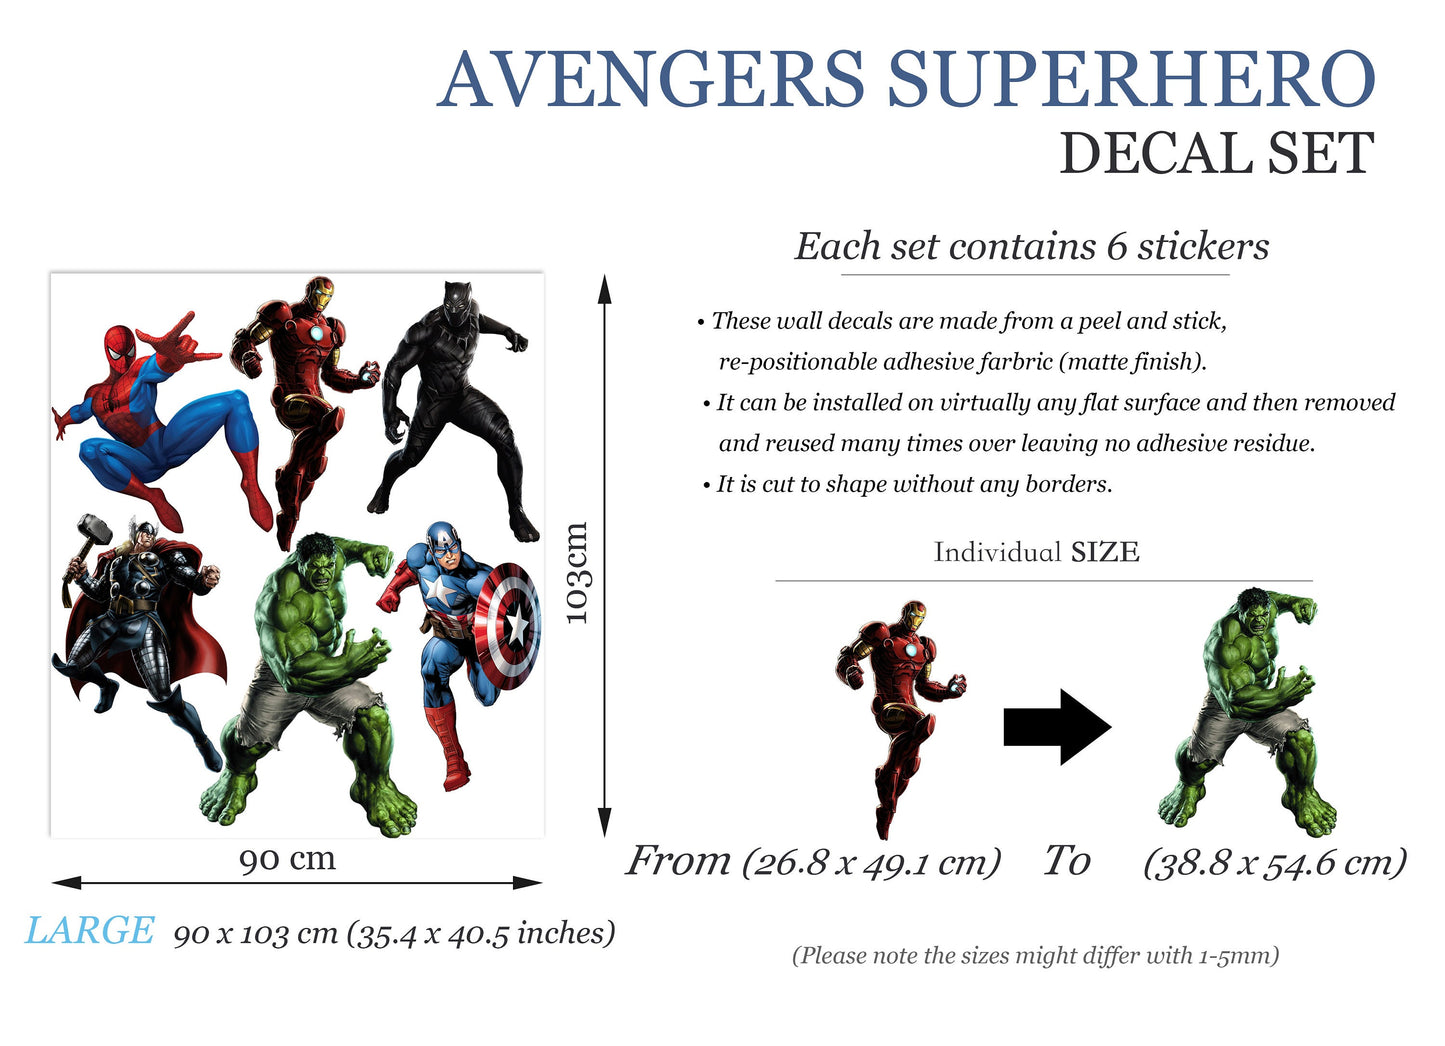 Superhero Hulk Spiderman Iron Man Captain America Avengers Thor Panther Wall Decal - Boys Room Decoration - BR191